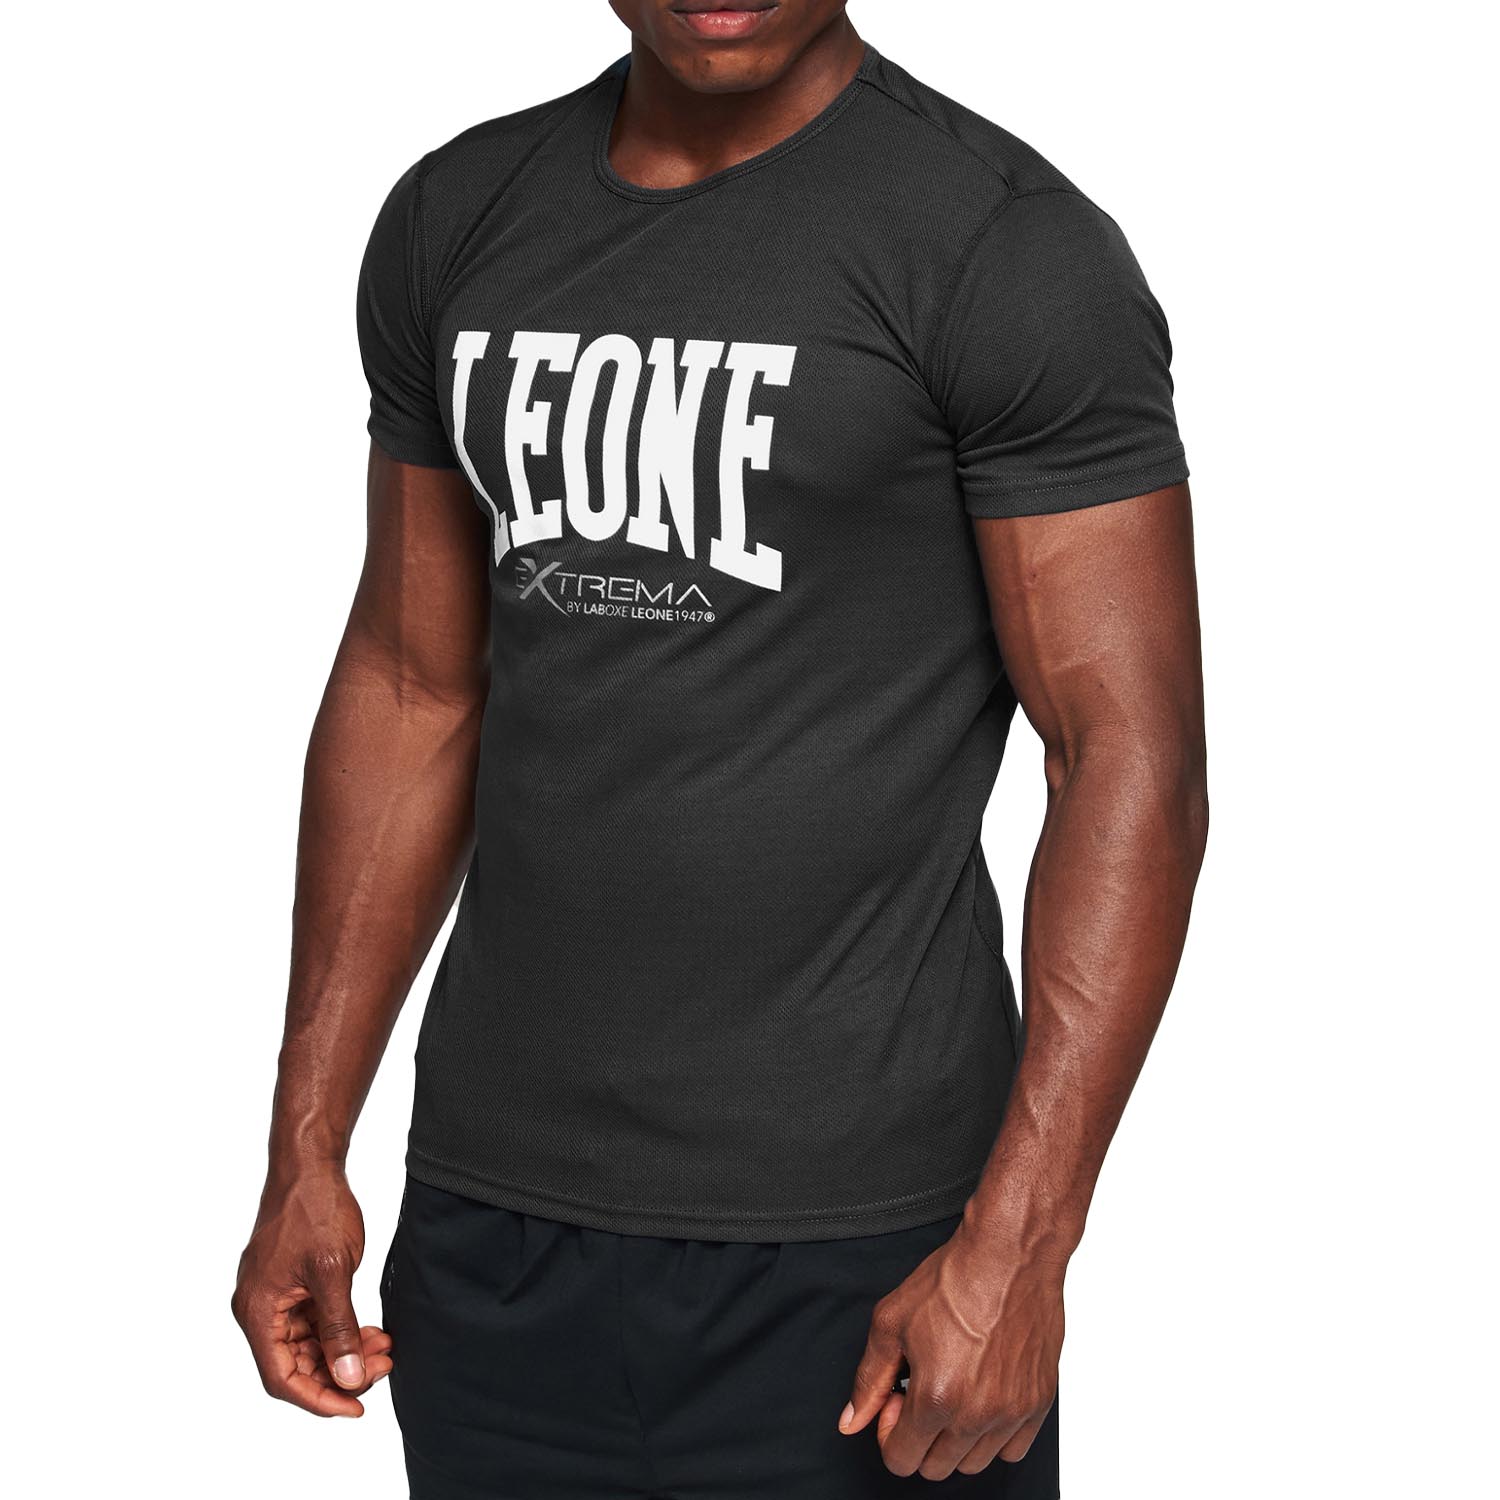 LEONE T-Shirt, Logo, ABX106, black